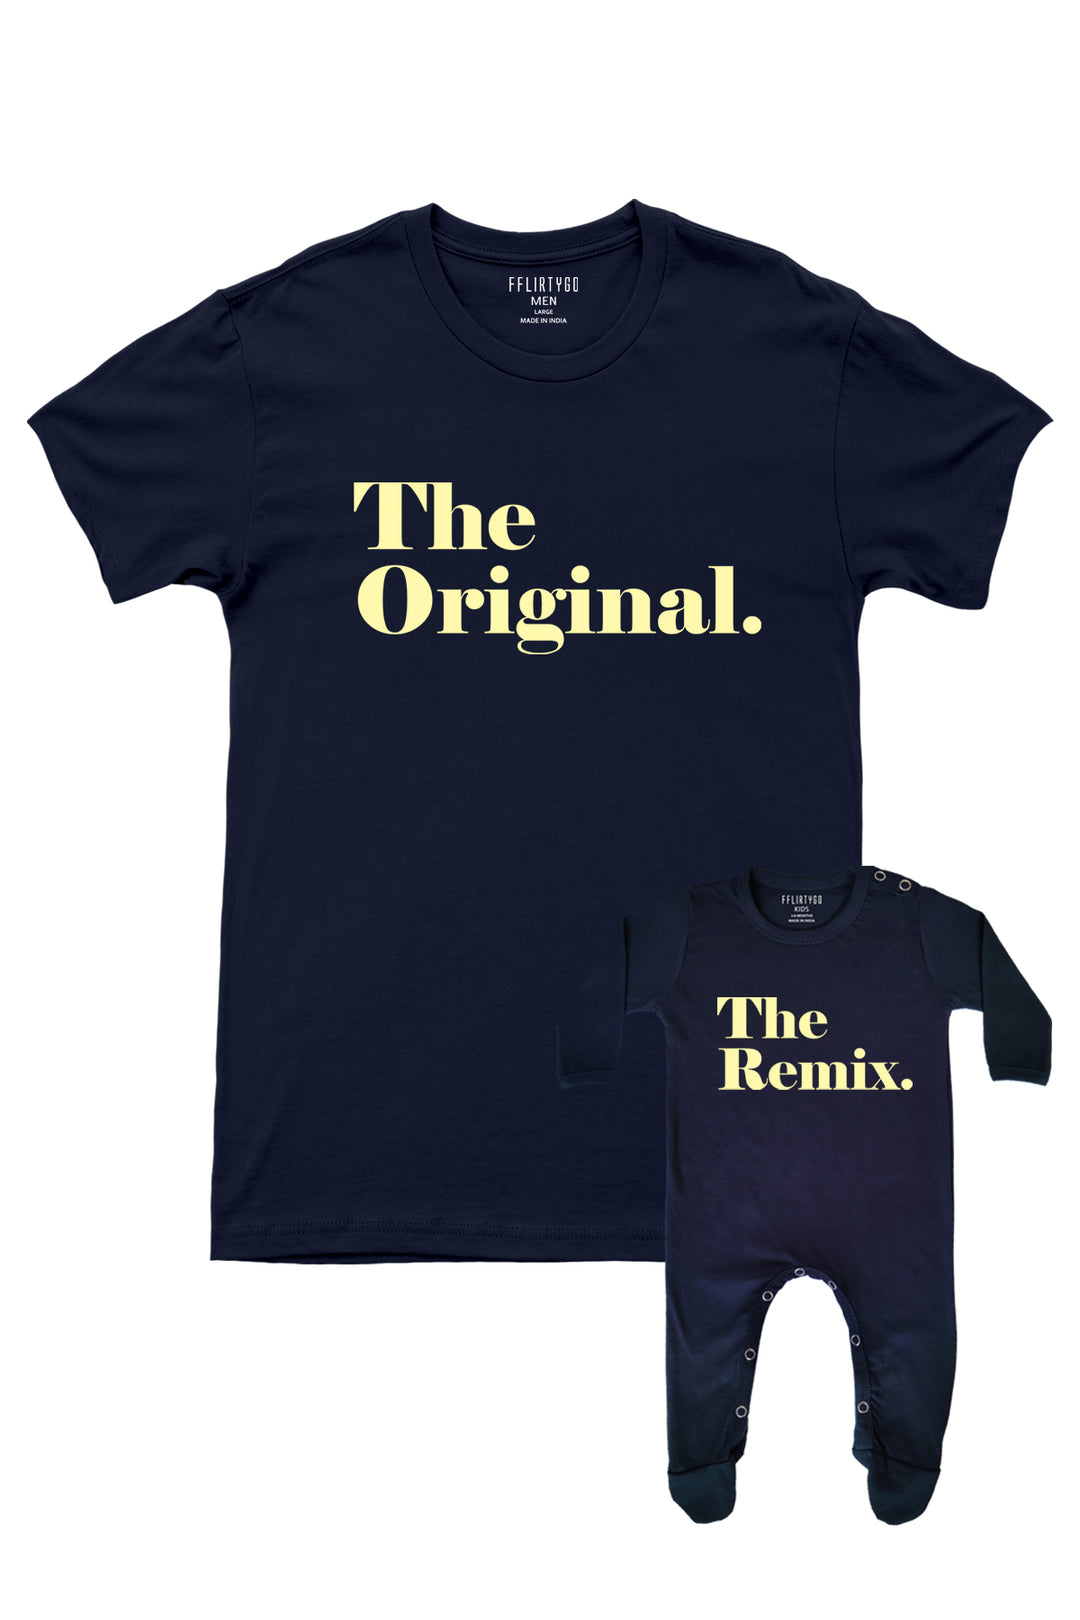 The Original - The Remix